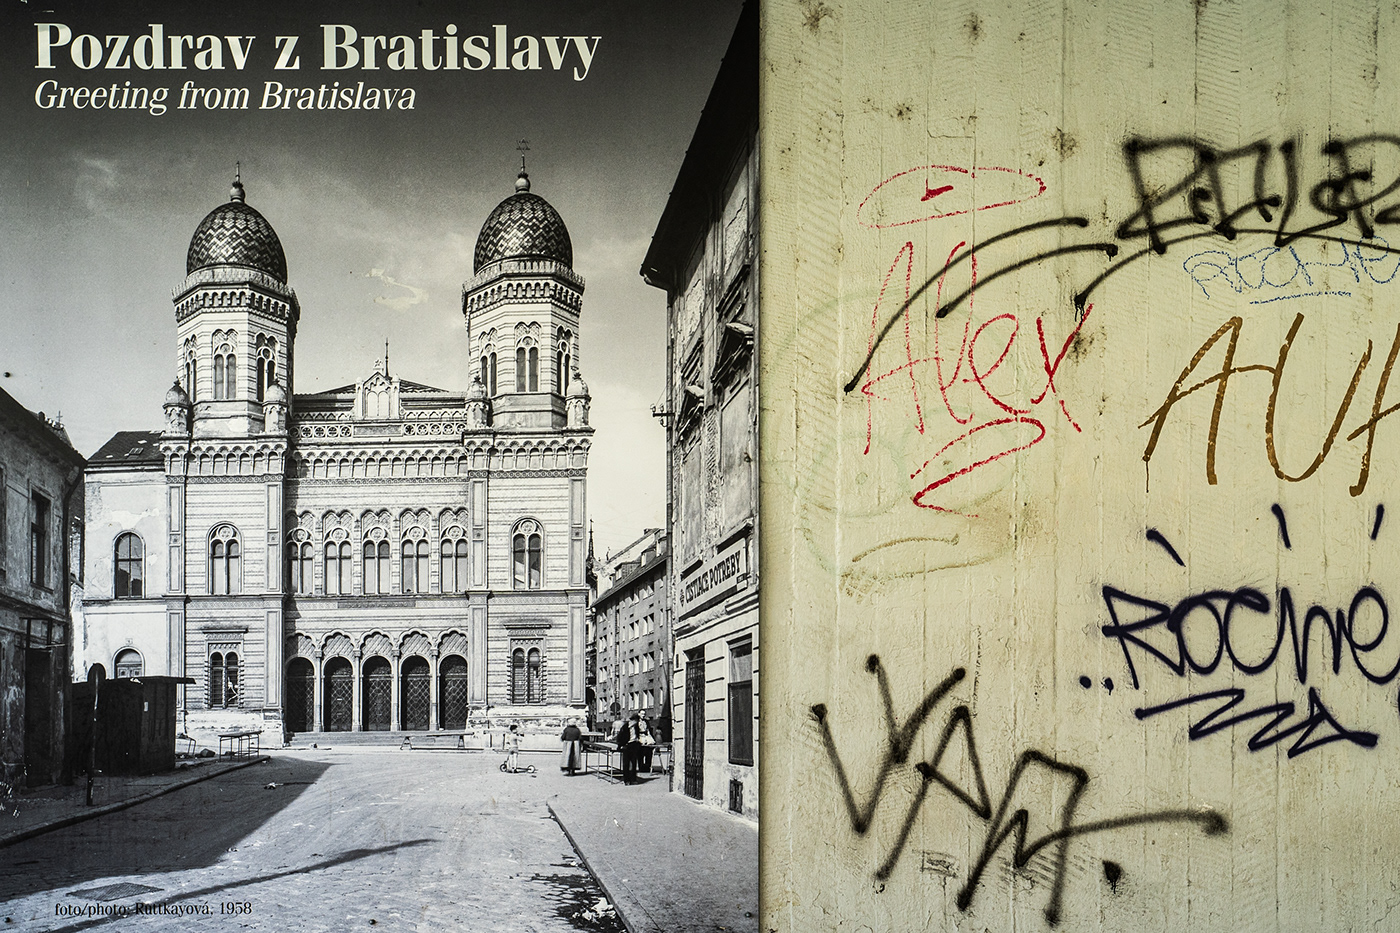 Bratislava eastern europe Paris Syndrome postcards souvenir design souvenirs streetphotography